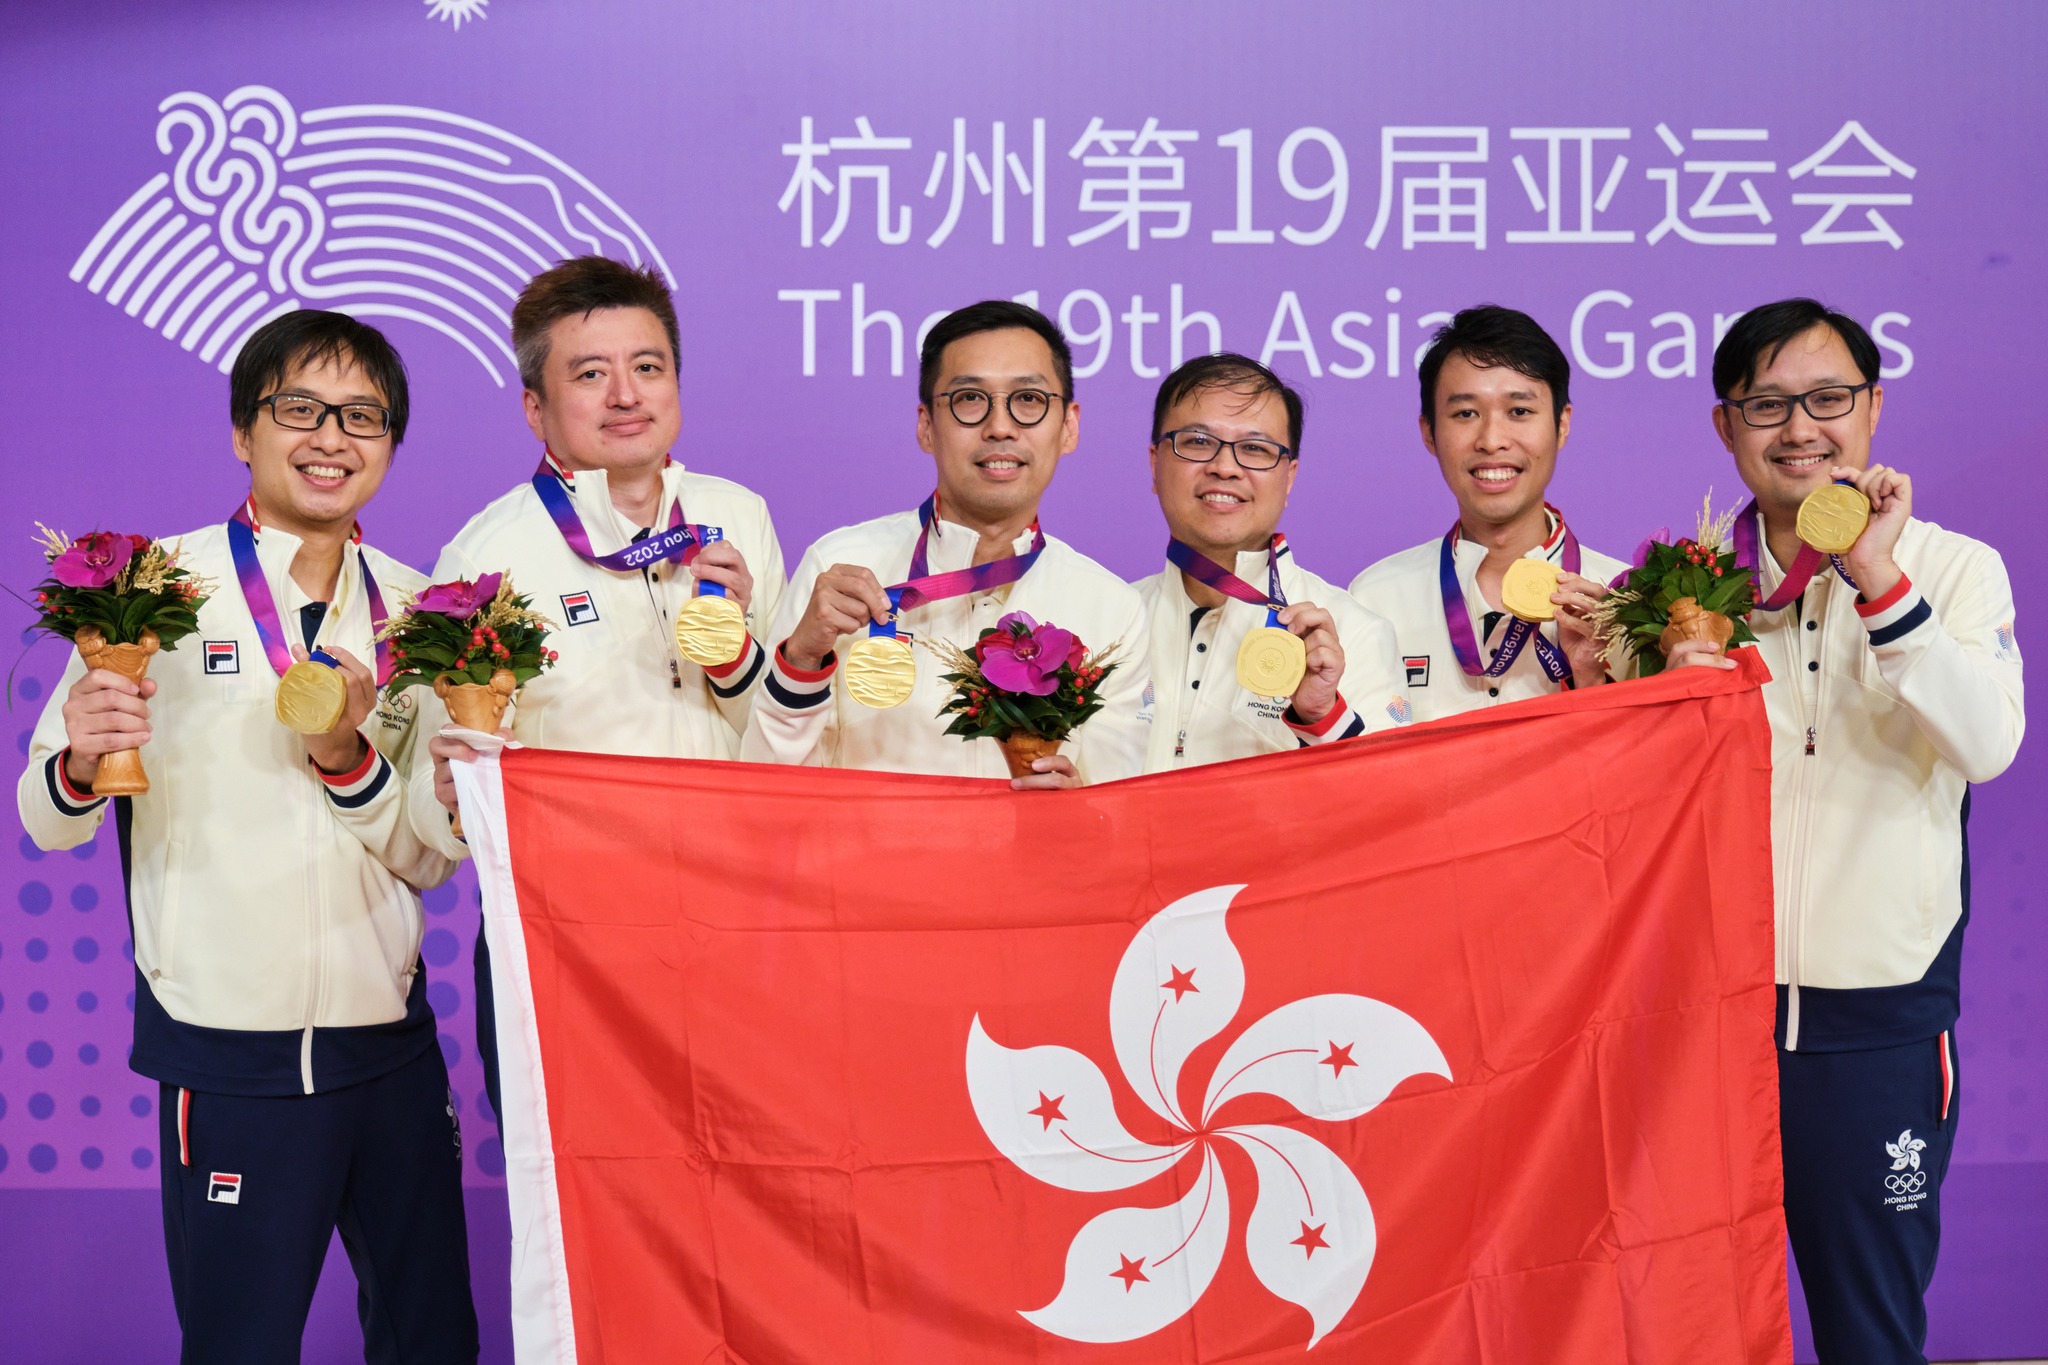 The Men's Bridge Team bags the gold medal for Hong Kong at Asian Games.